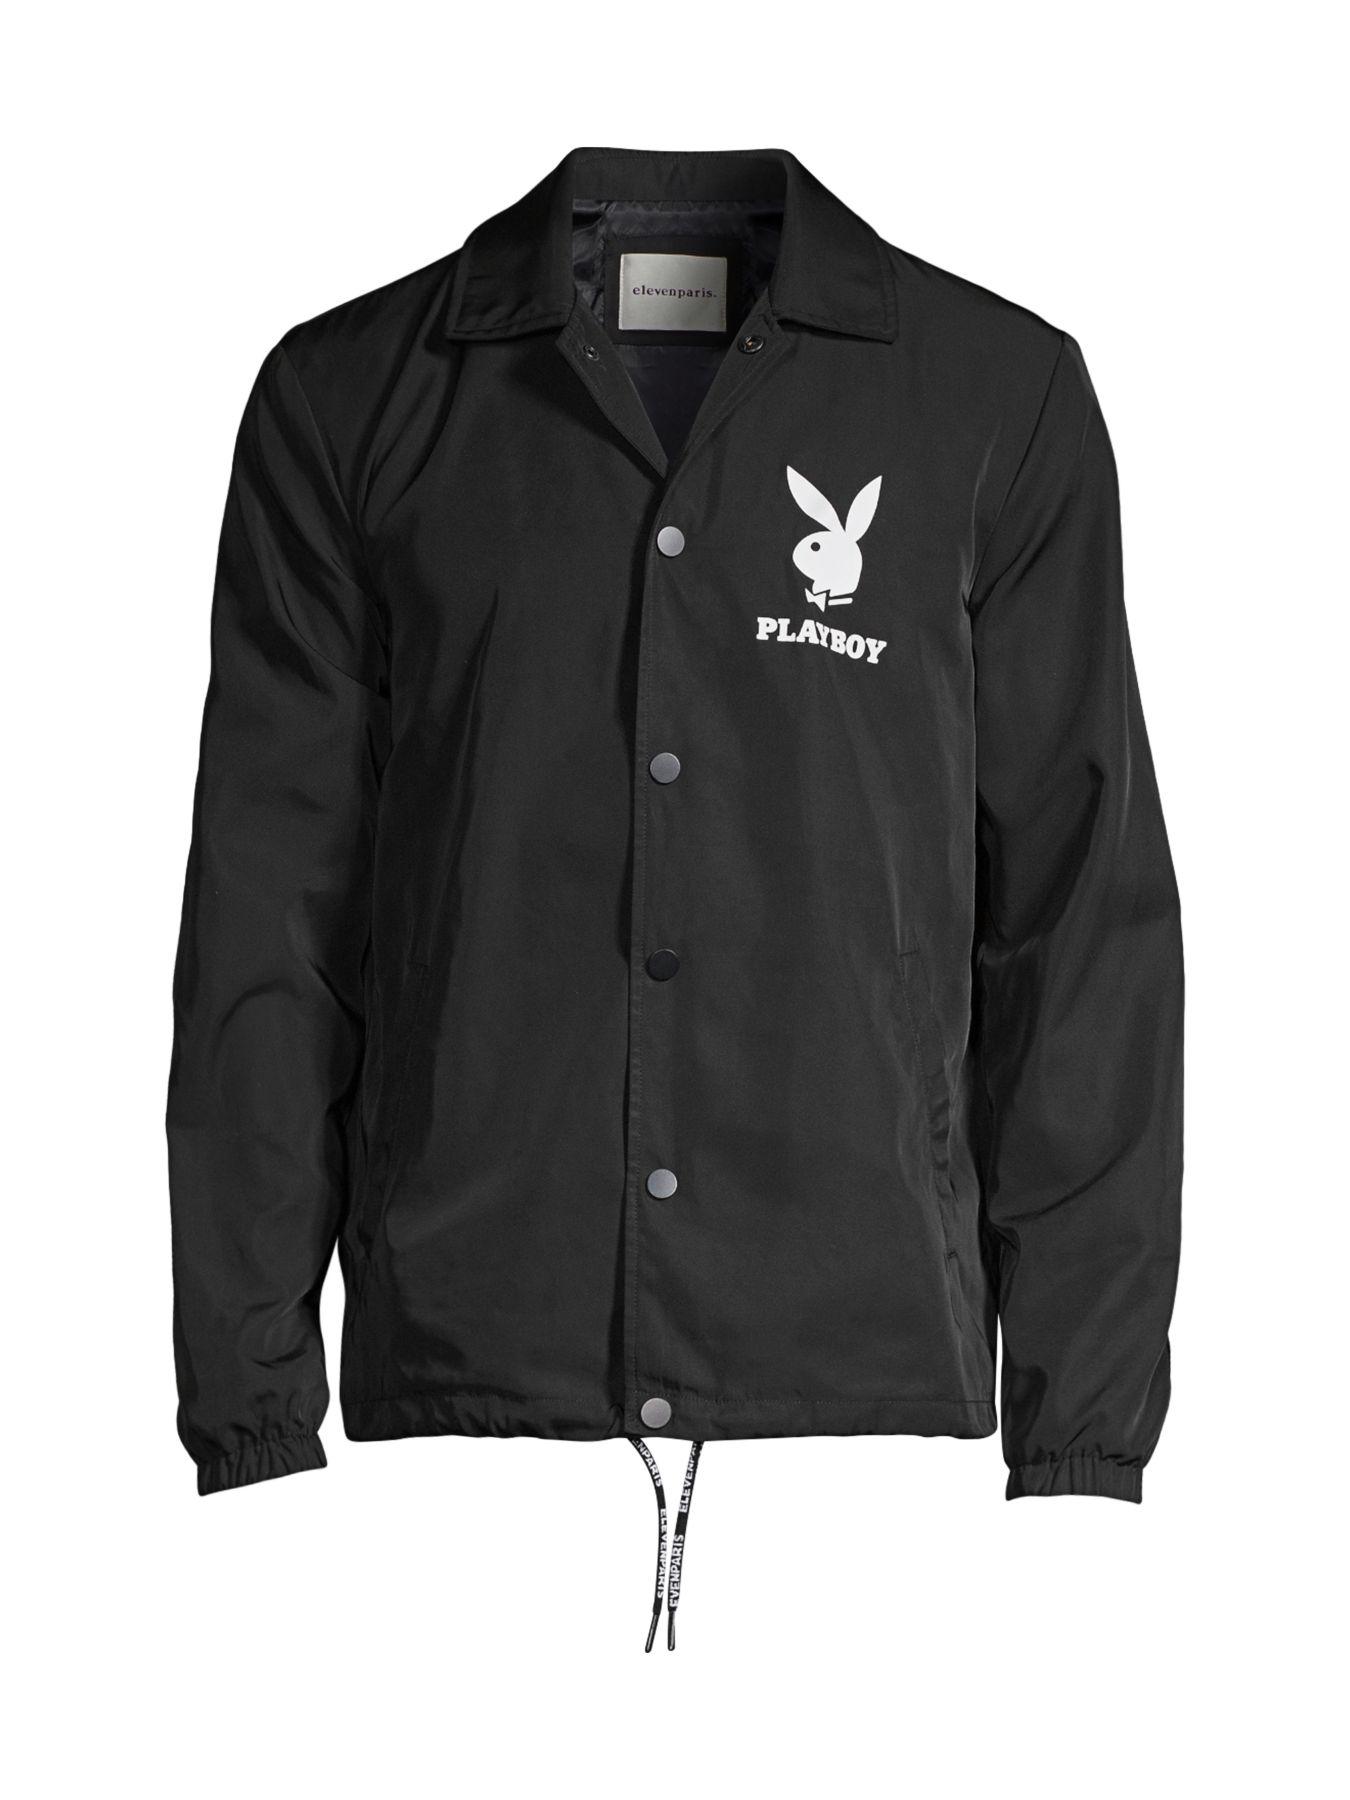 playboy windbreaker jacket